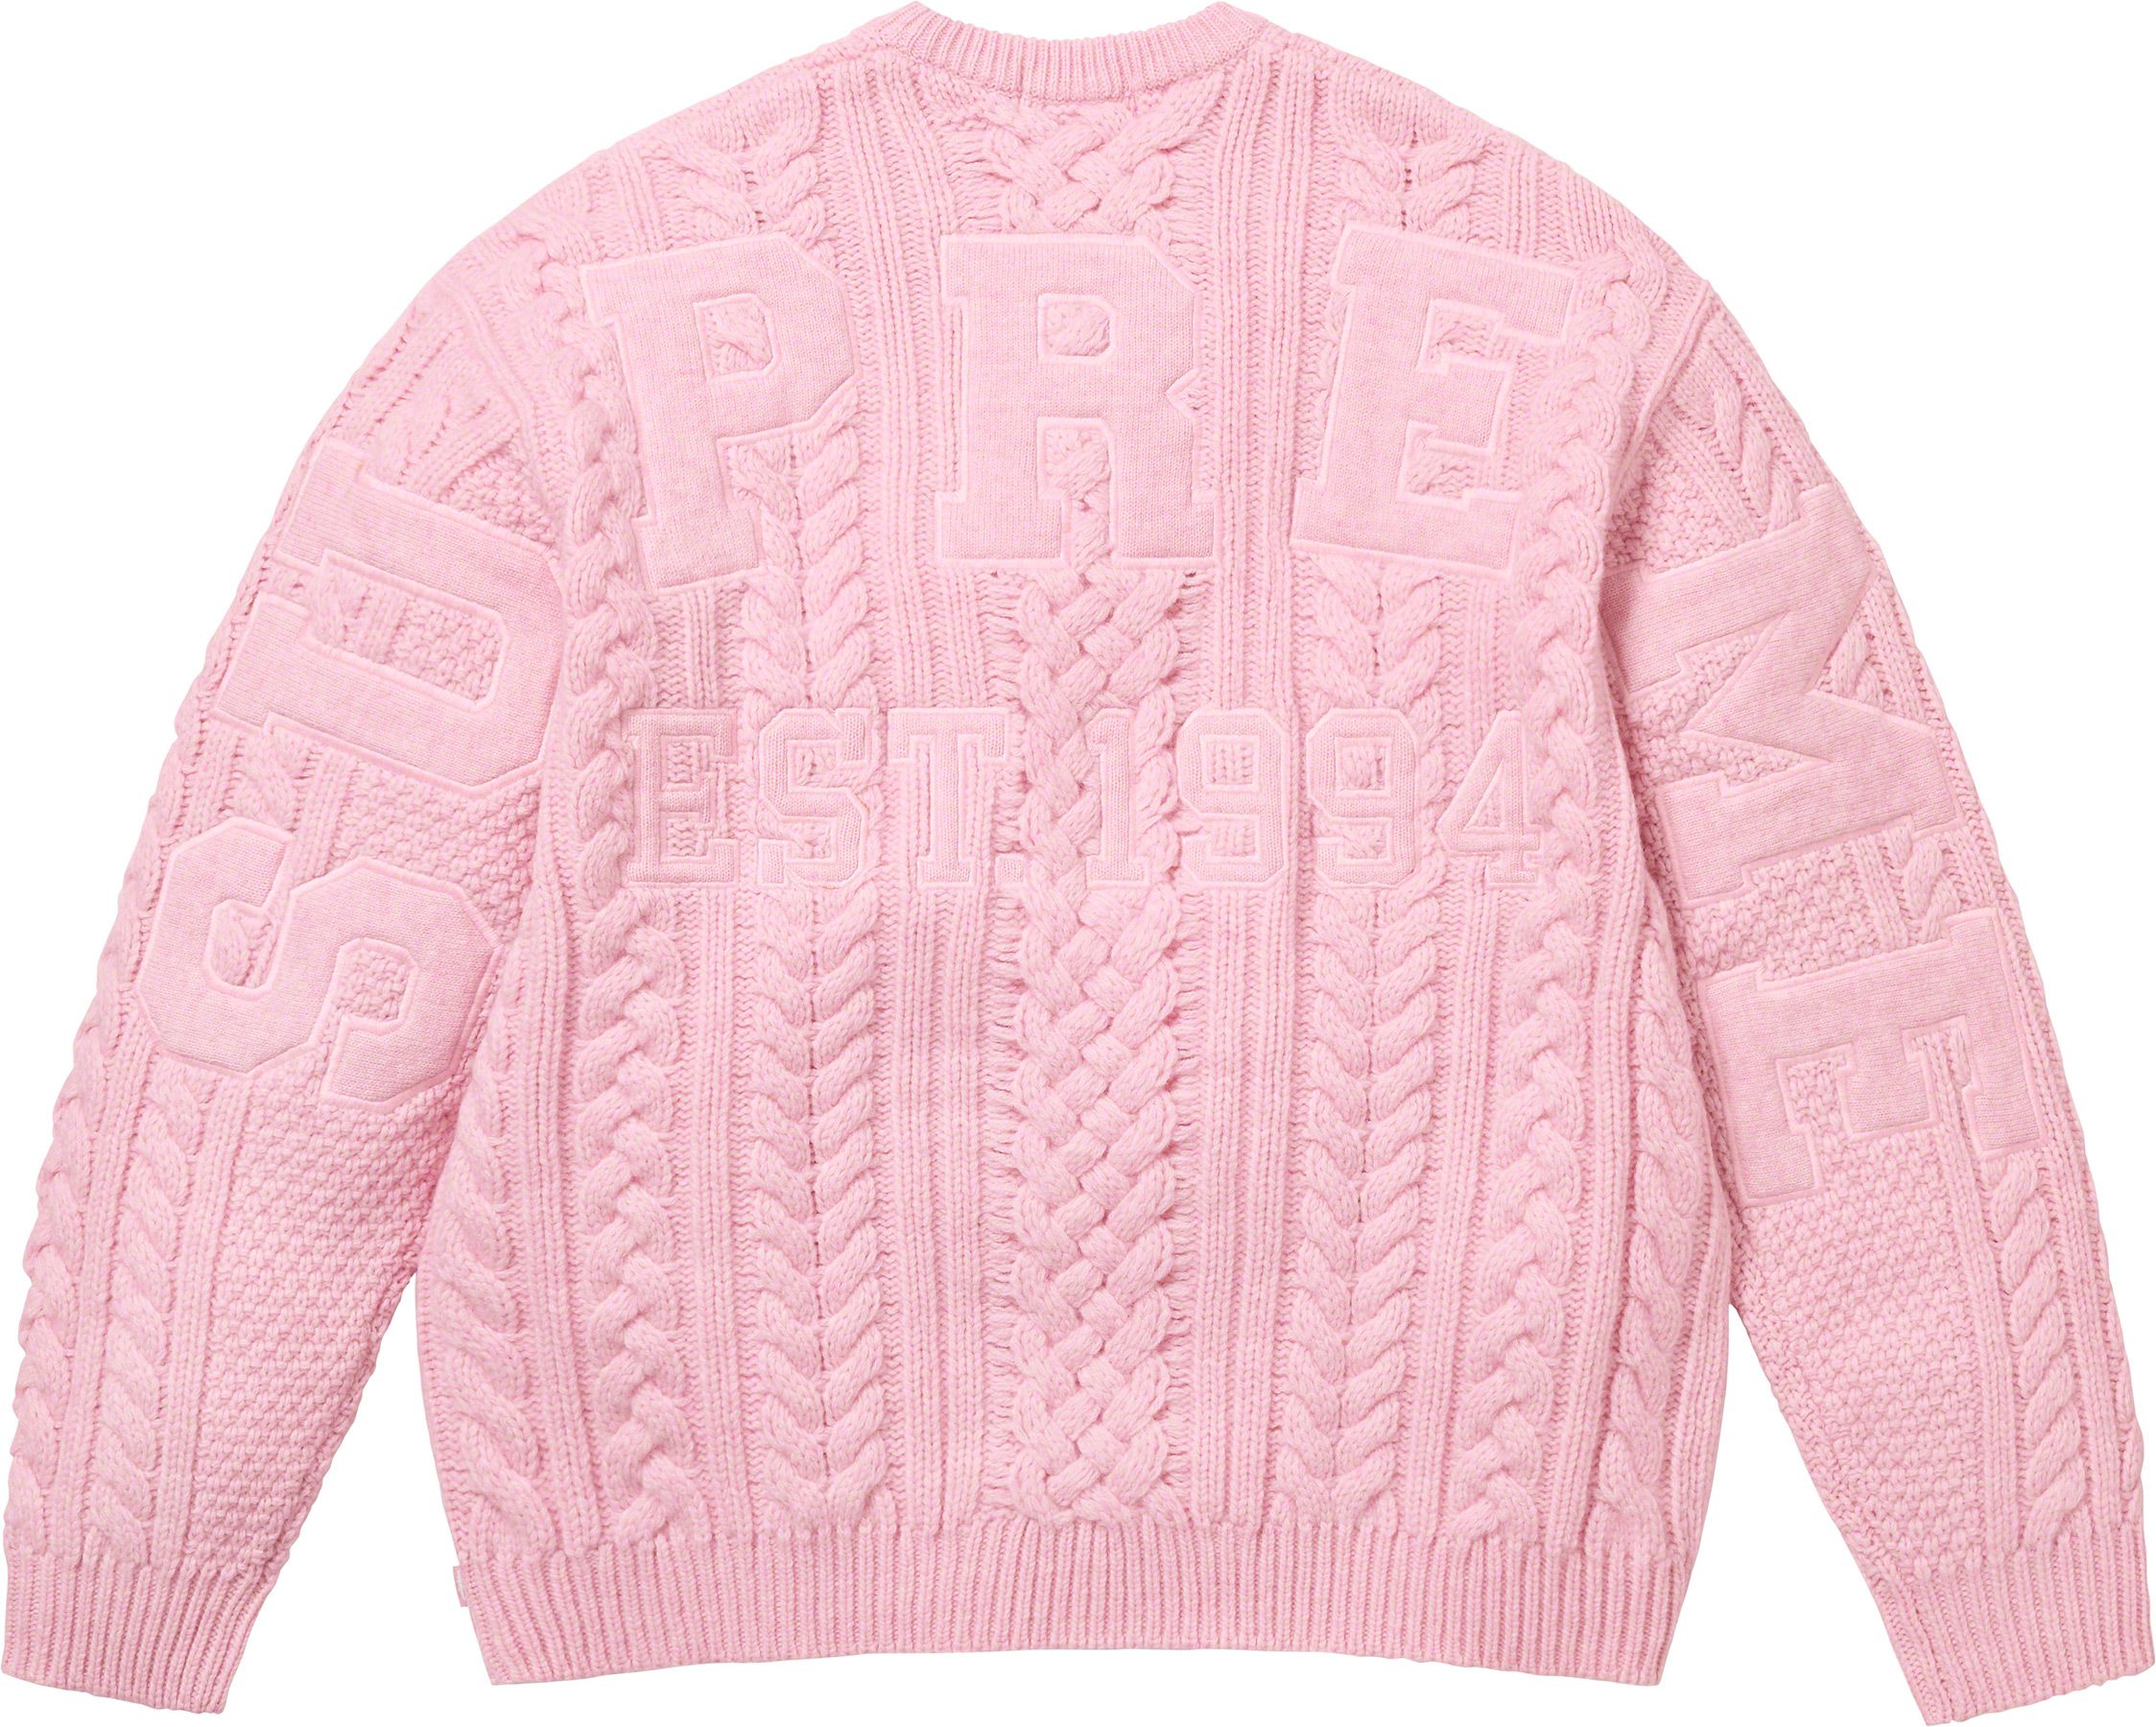 Supreme Applique Cable Knit Sweater Sサイズ購入先Sup